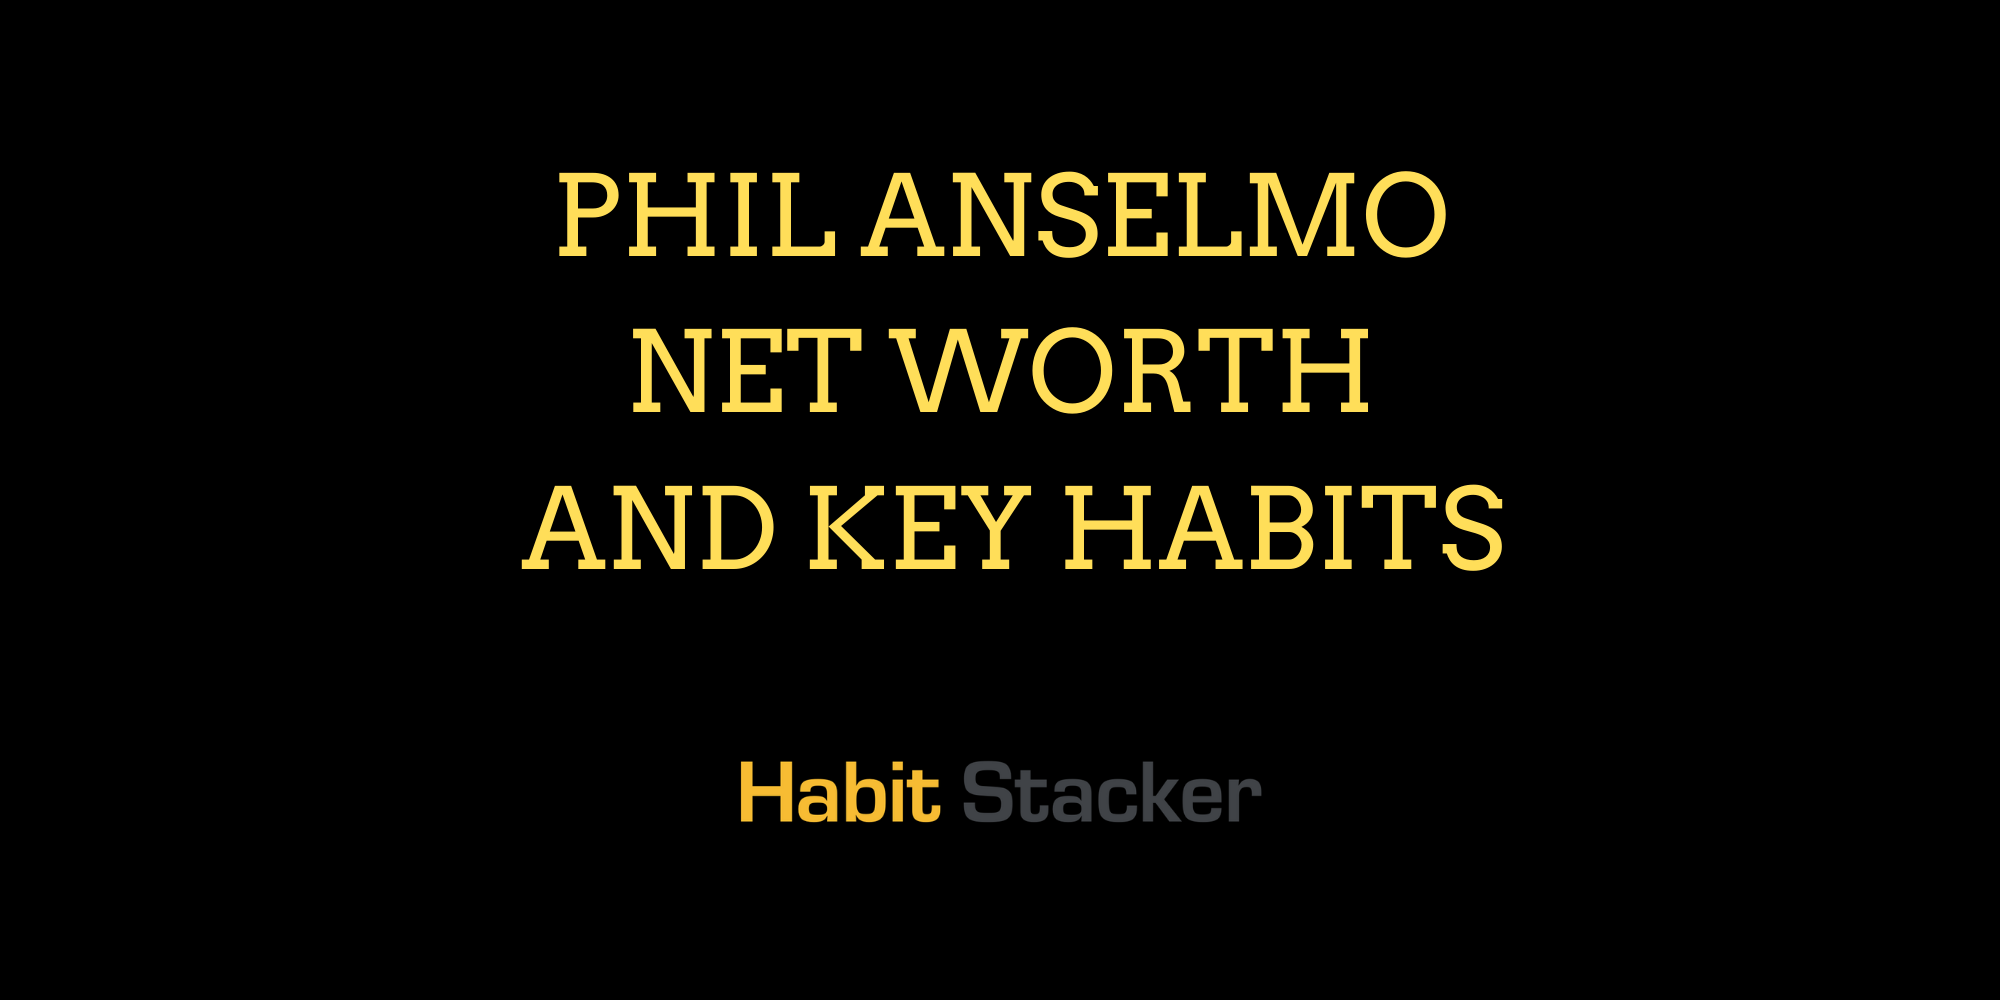 Phil Anselmo Net Worth and Key Habits